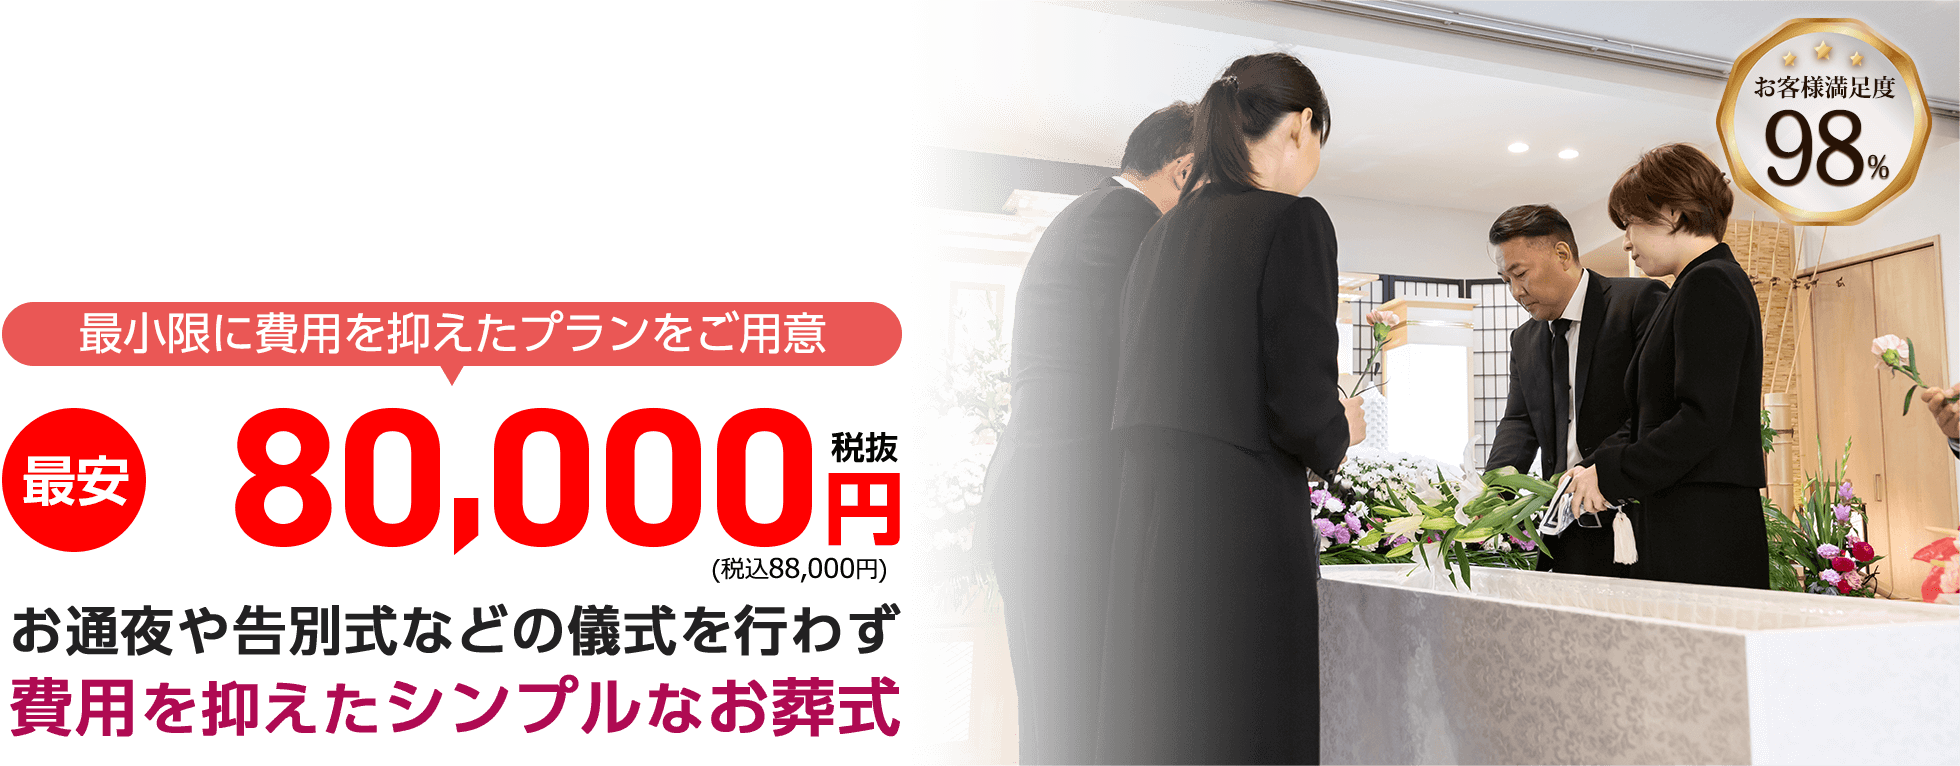 静岡市で最安価格を実現 直葬･火葬式